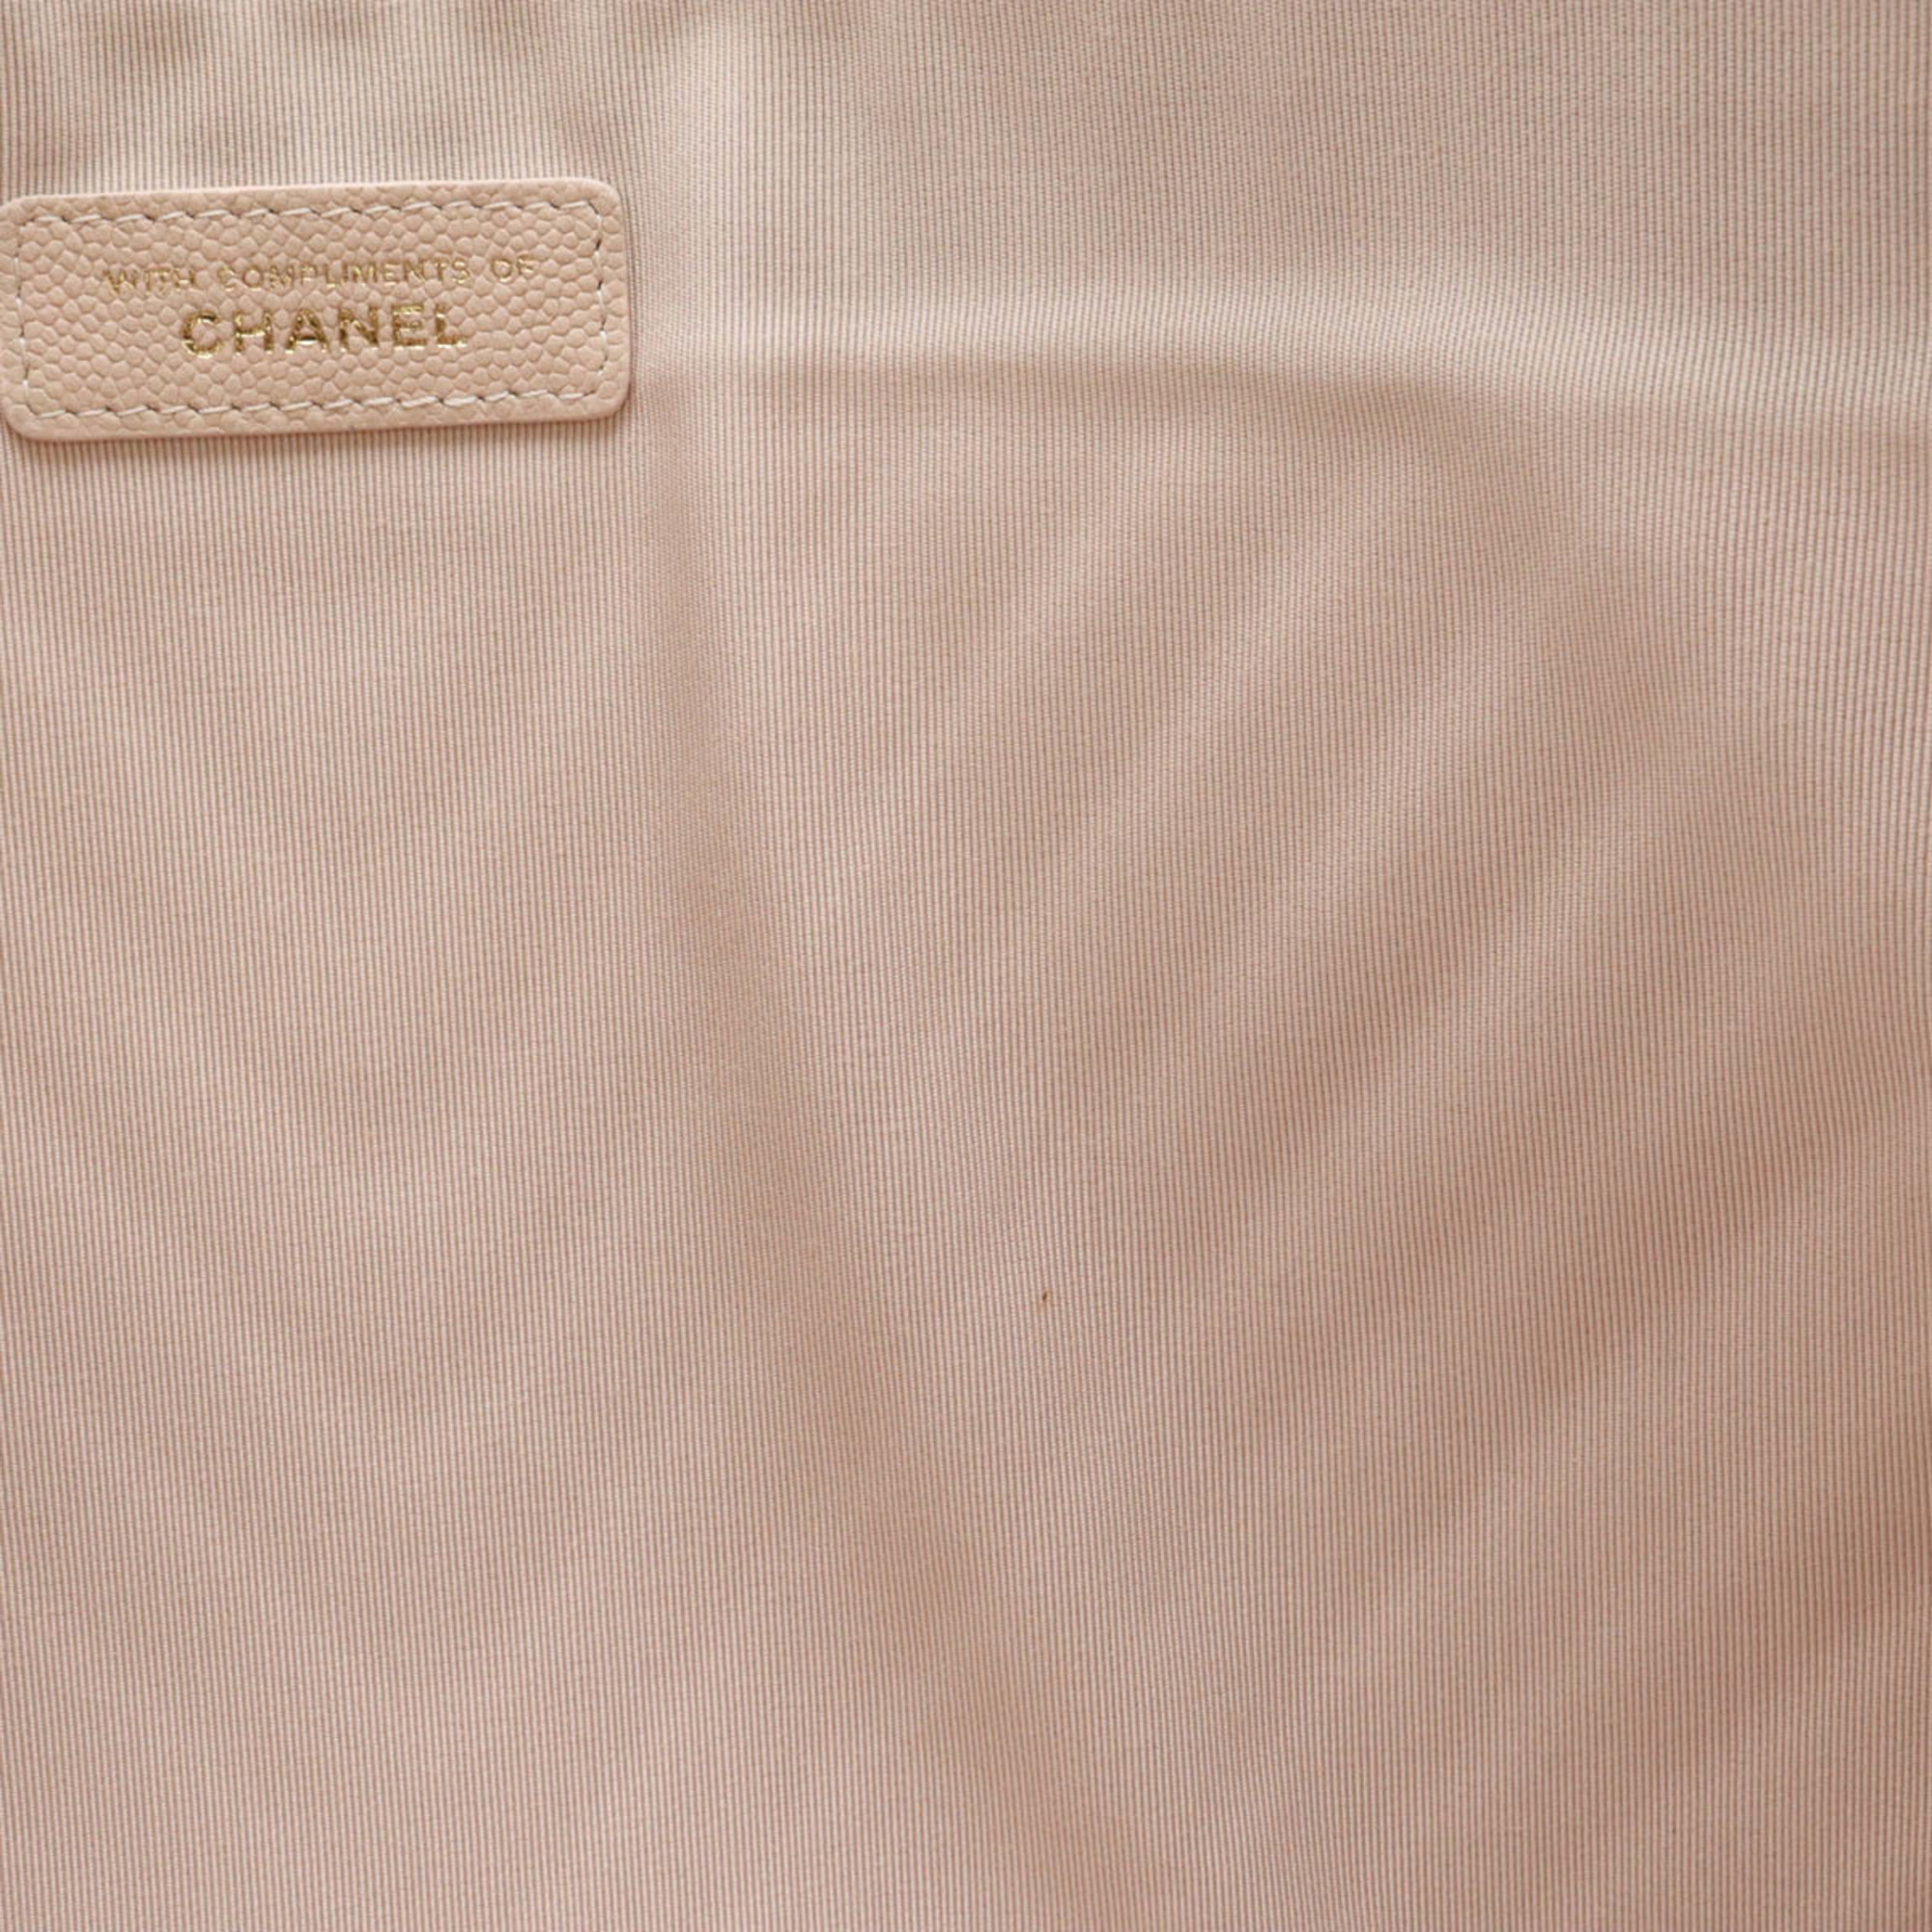 CHANEL Chevron V-stitch Coco Mark Clutch Bag Second Caviar Skin Leather Baby Pink A69251